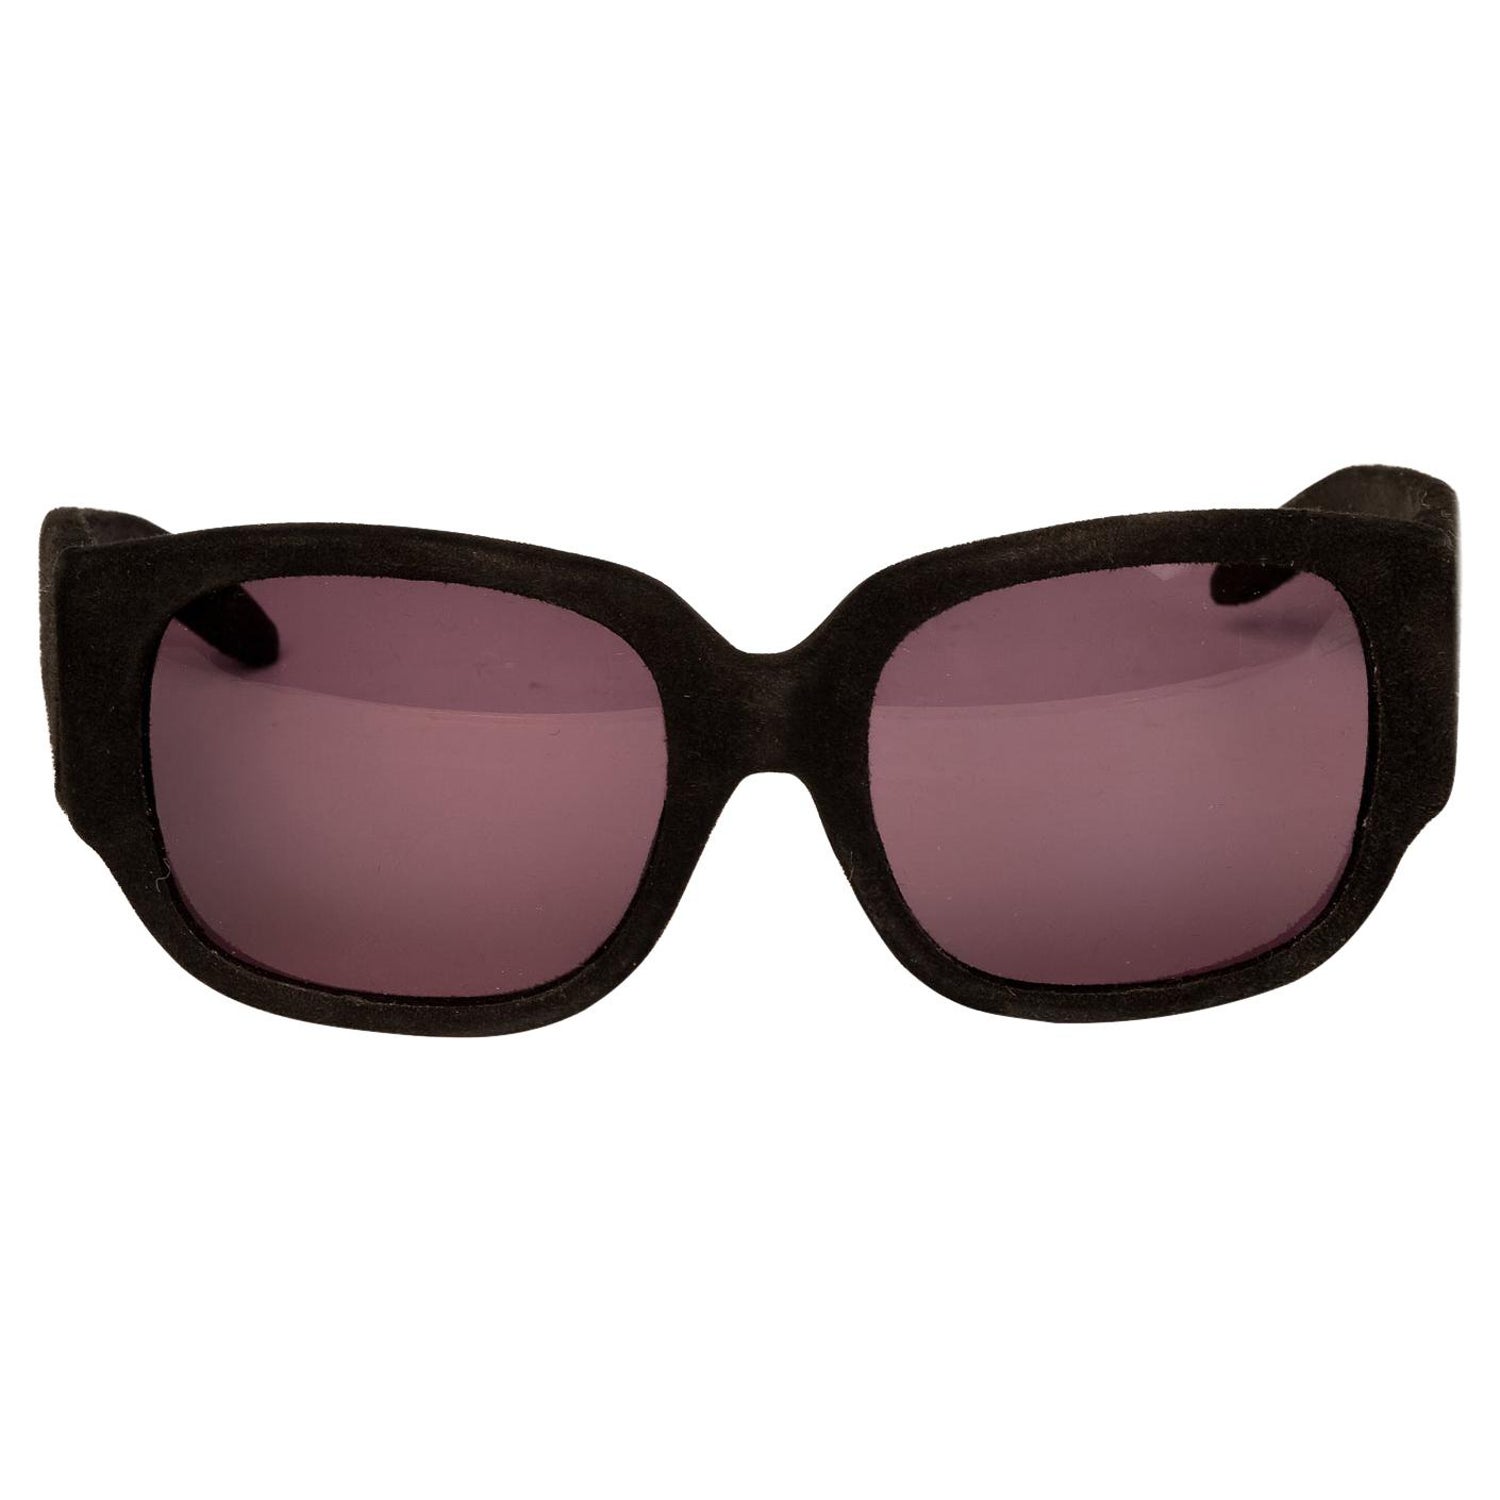 Louis Vuitton Cyclone Sunglasses Beige for Women